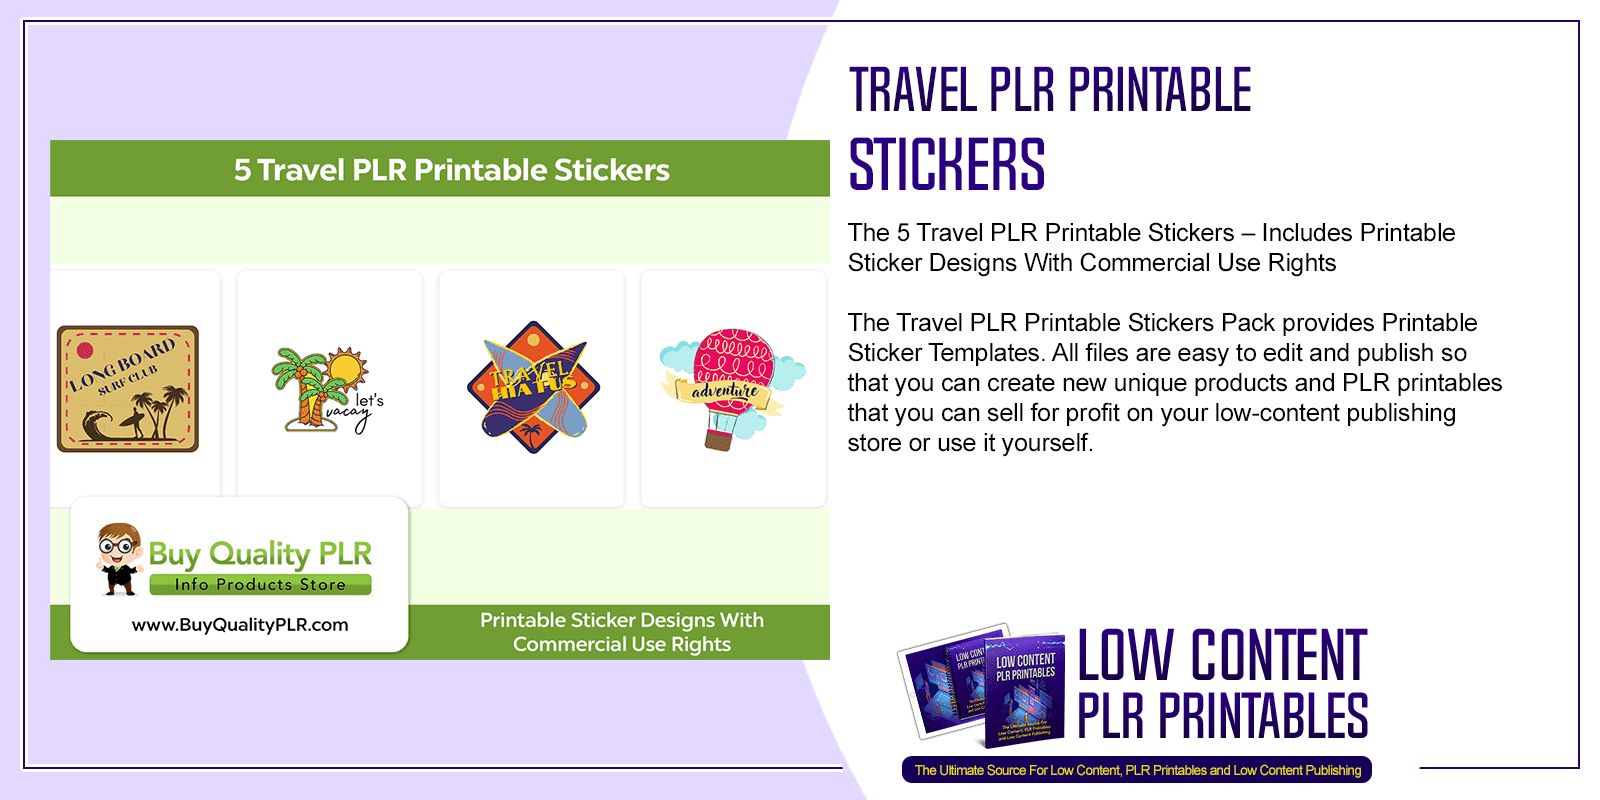 Travel PLR Printable Stickers